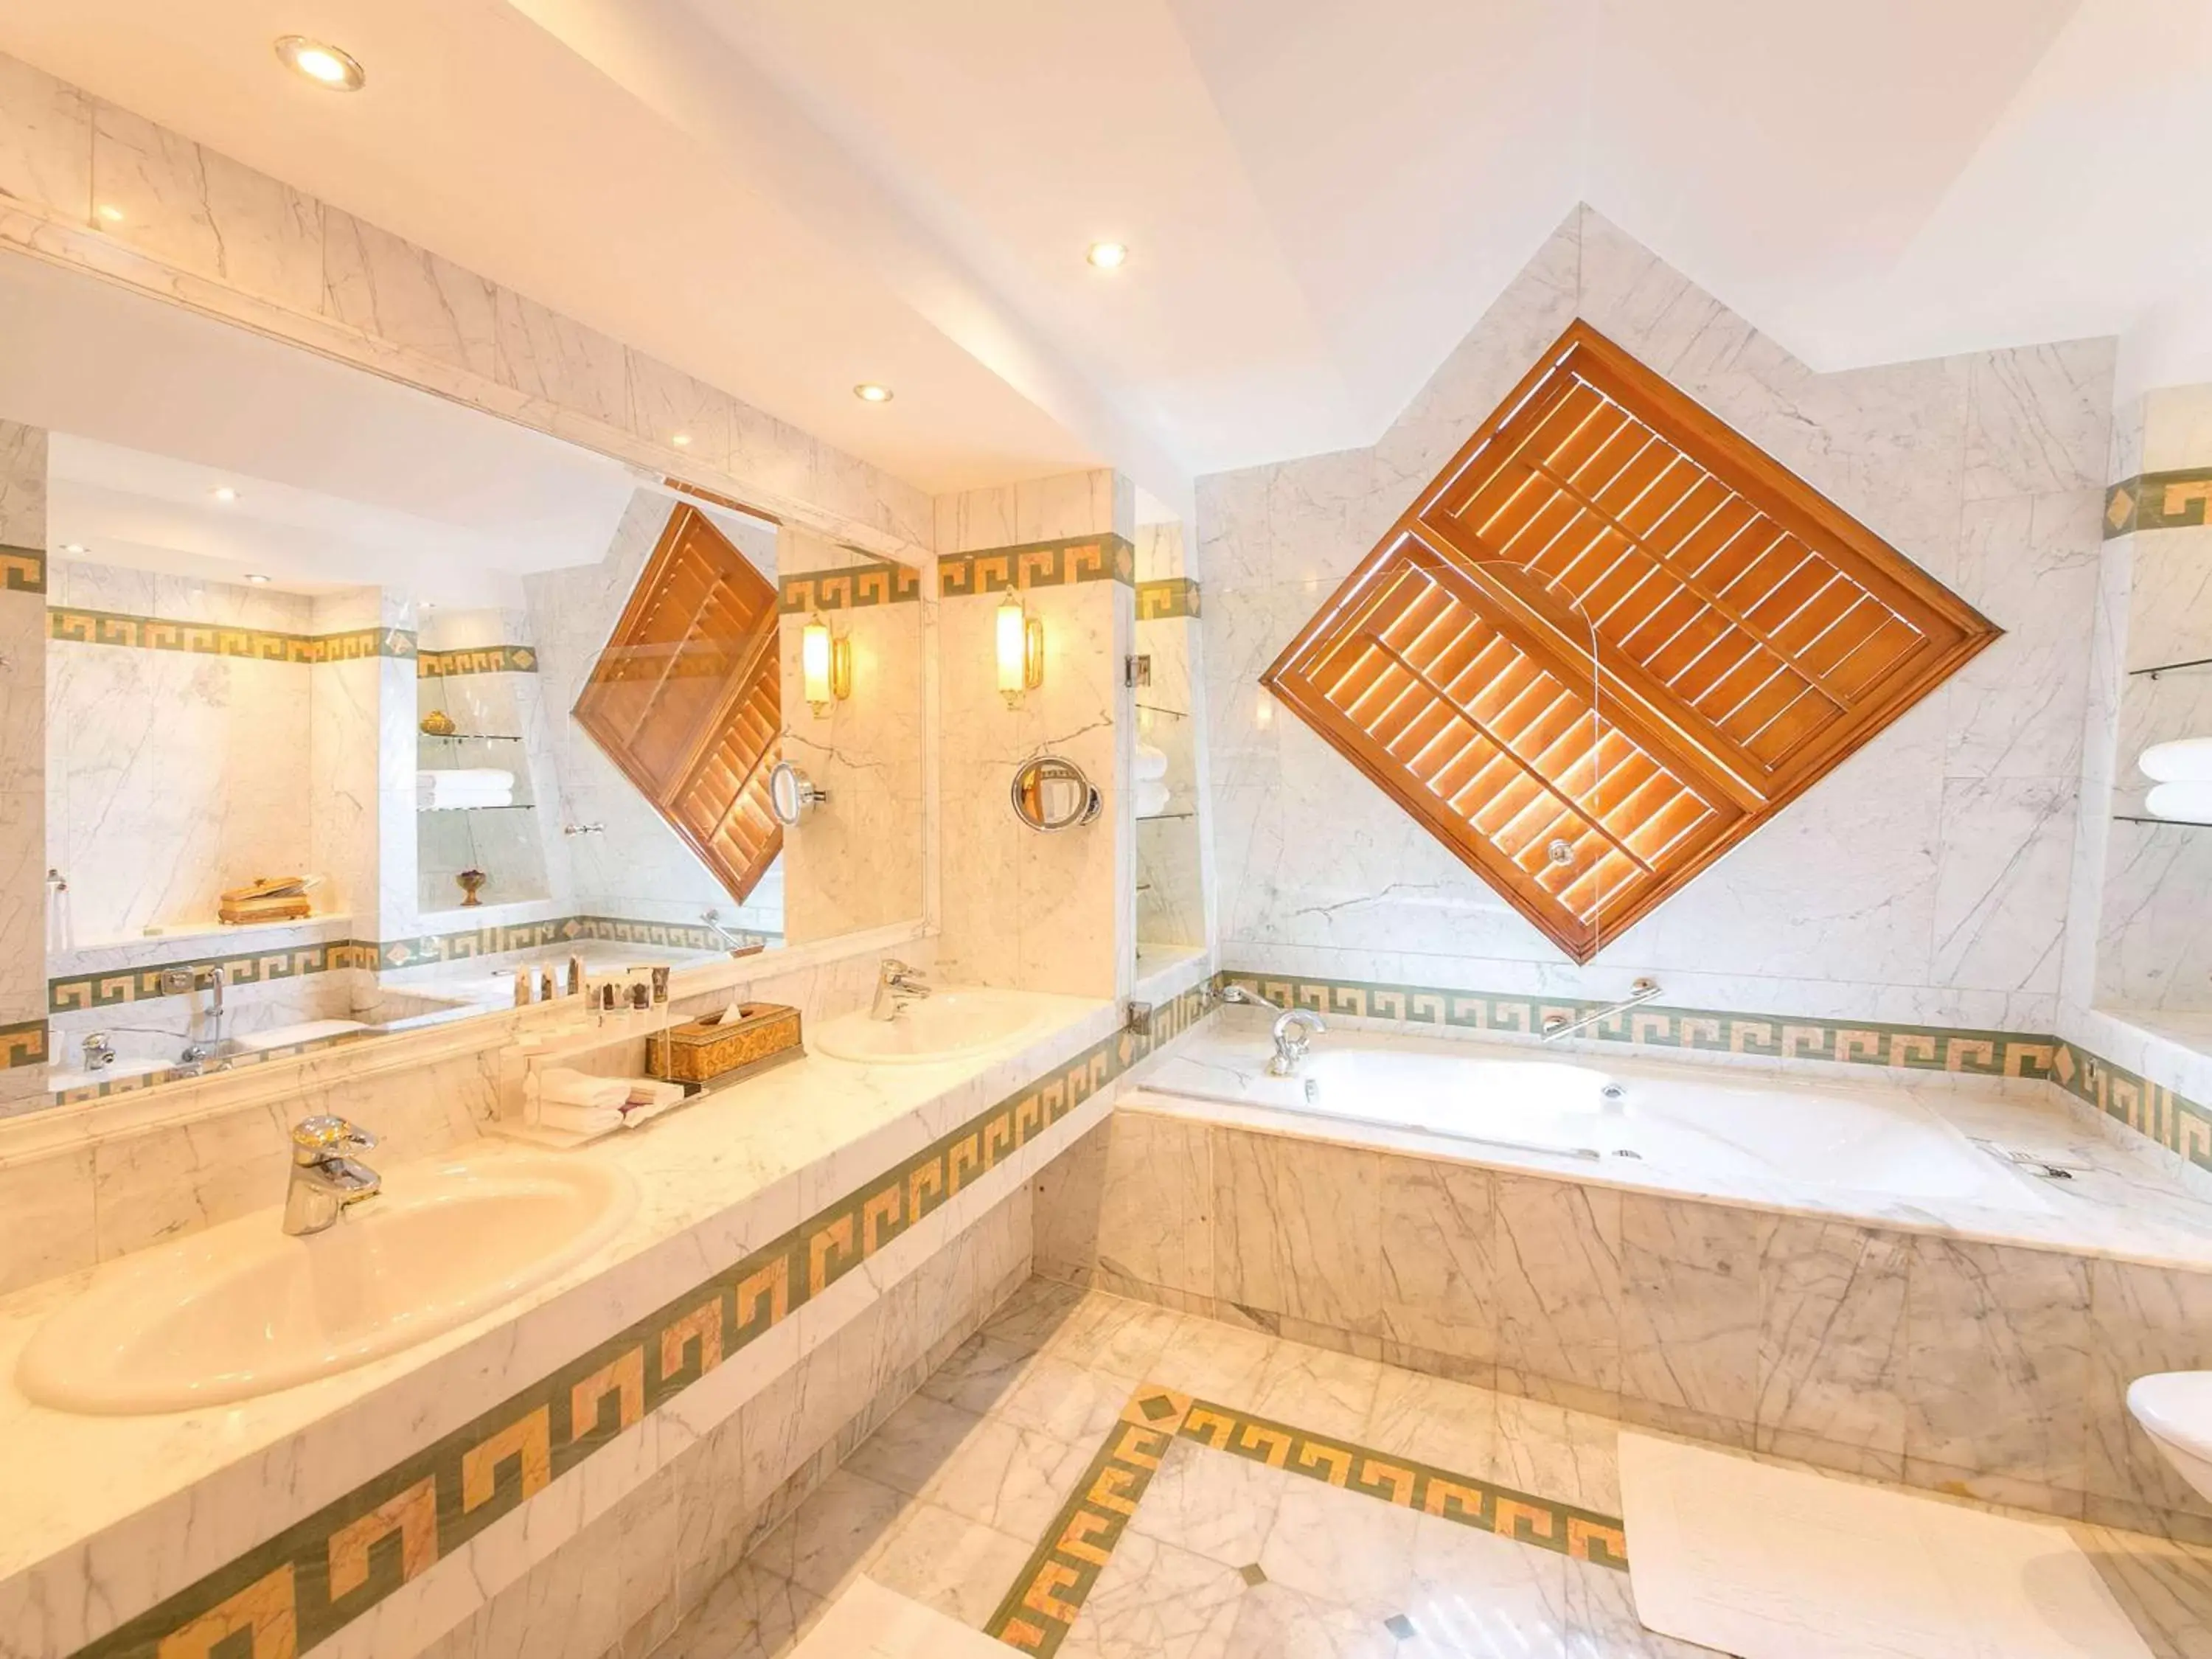 Photo of the whole room, Bathroom in Mercure Grand Jebel Hafeet Hotel